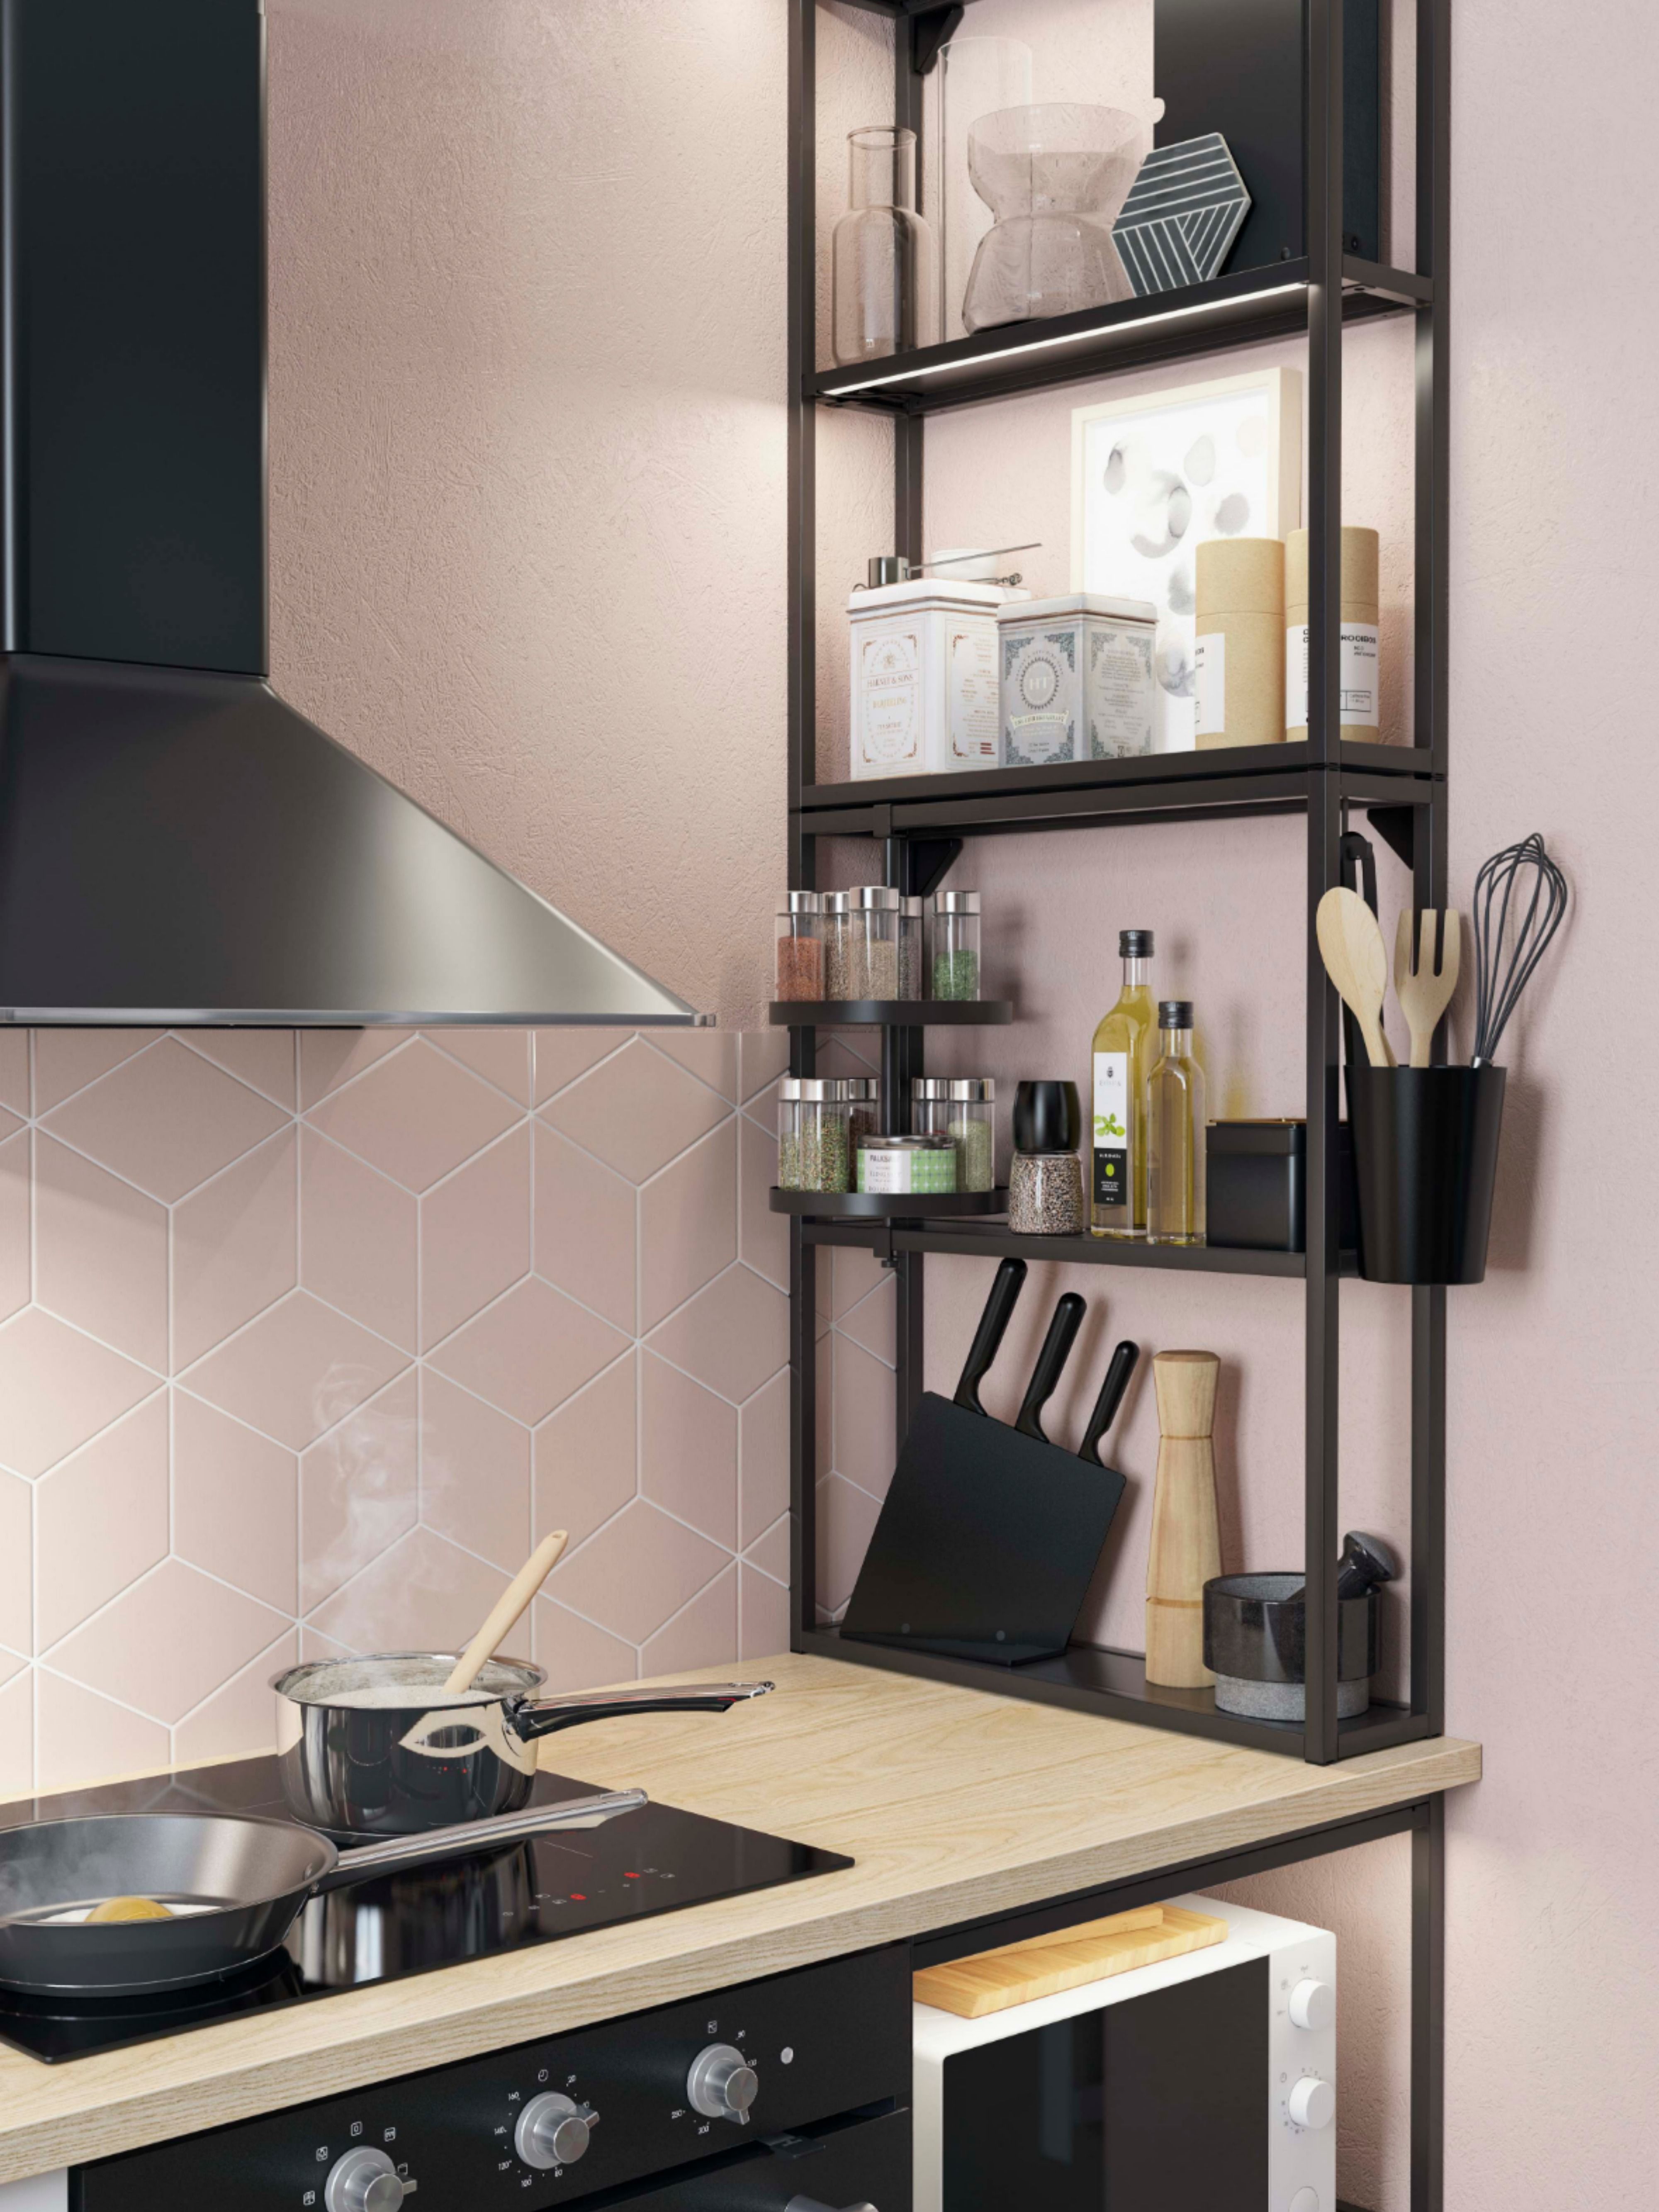 Easy kitchen fix under £1,000: ready-made kitchen by IKEA 